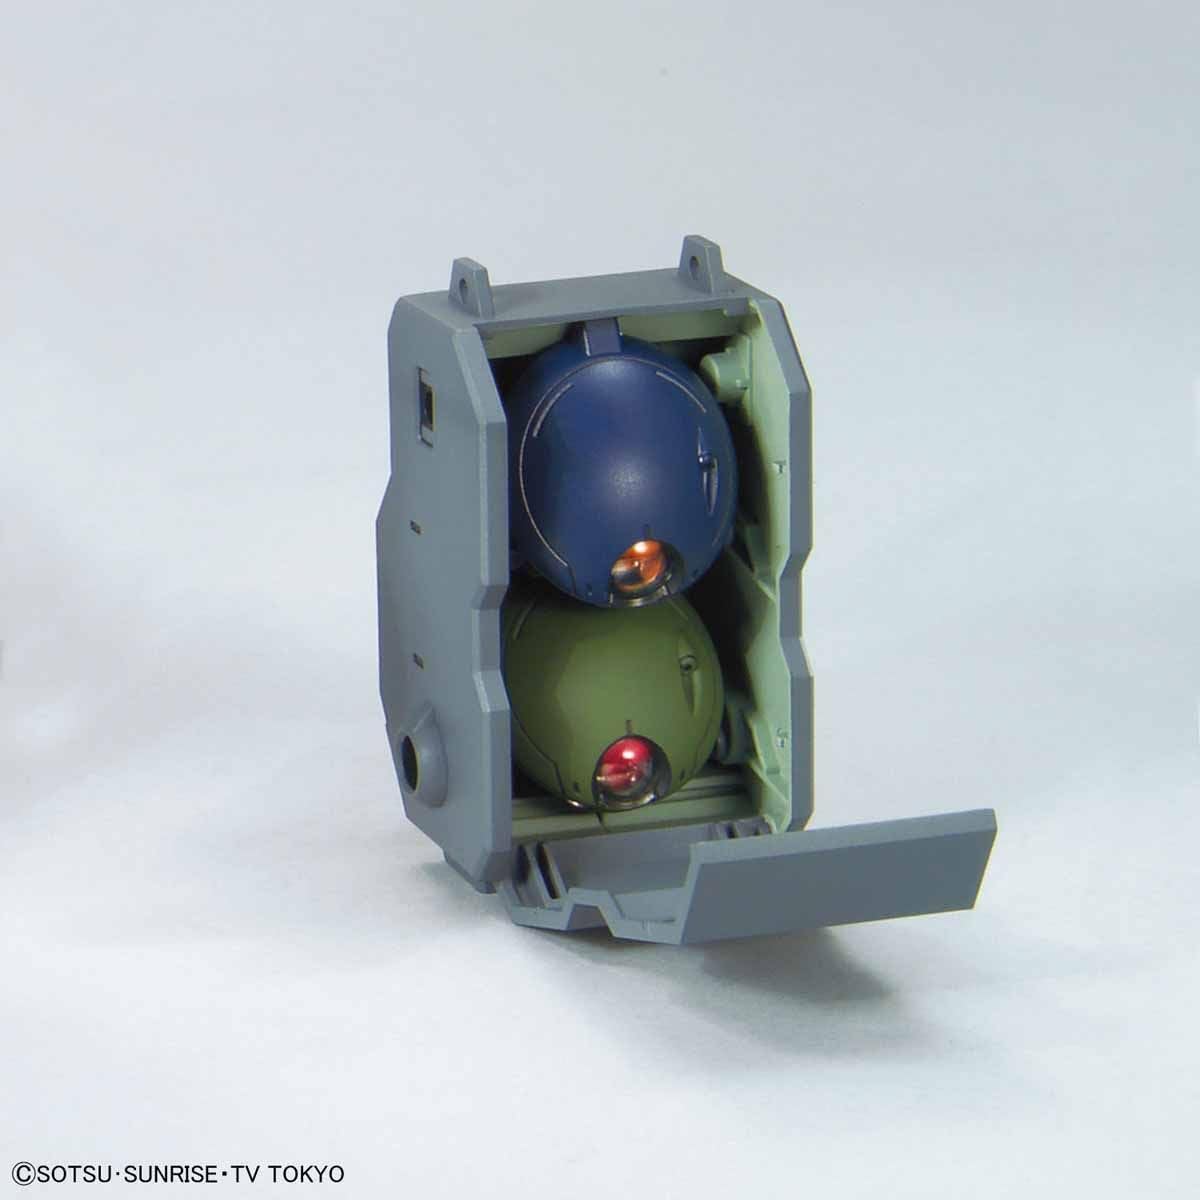 Bandai HGBD003 Gundam Build Divers Grimoire Red Beret - BanzaiHobby